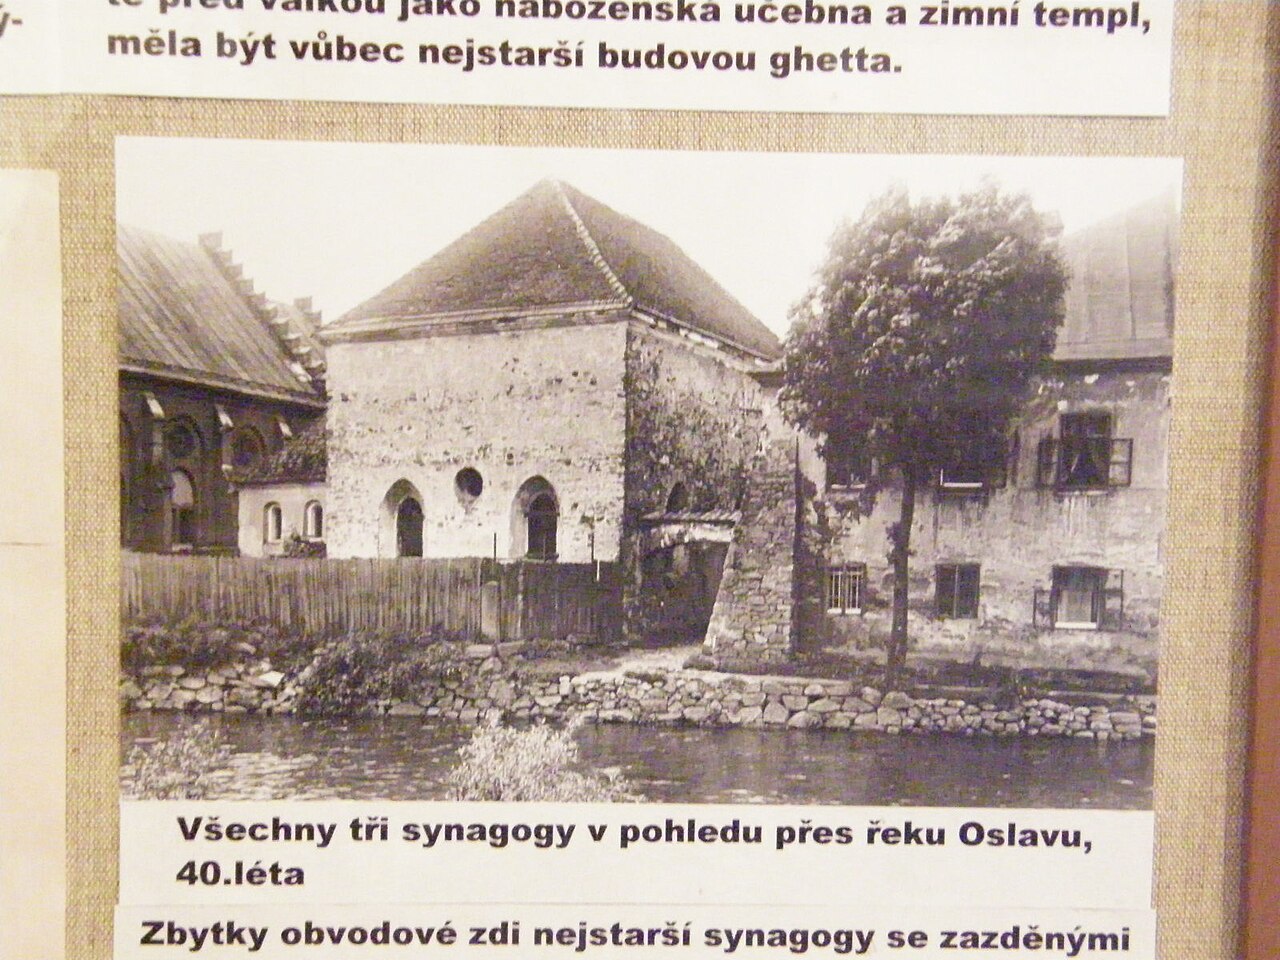 All three synagogues in Velké Meziříčí - detail from exposition.jpg